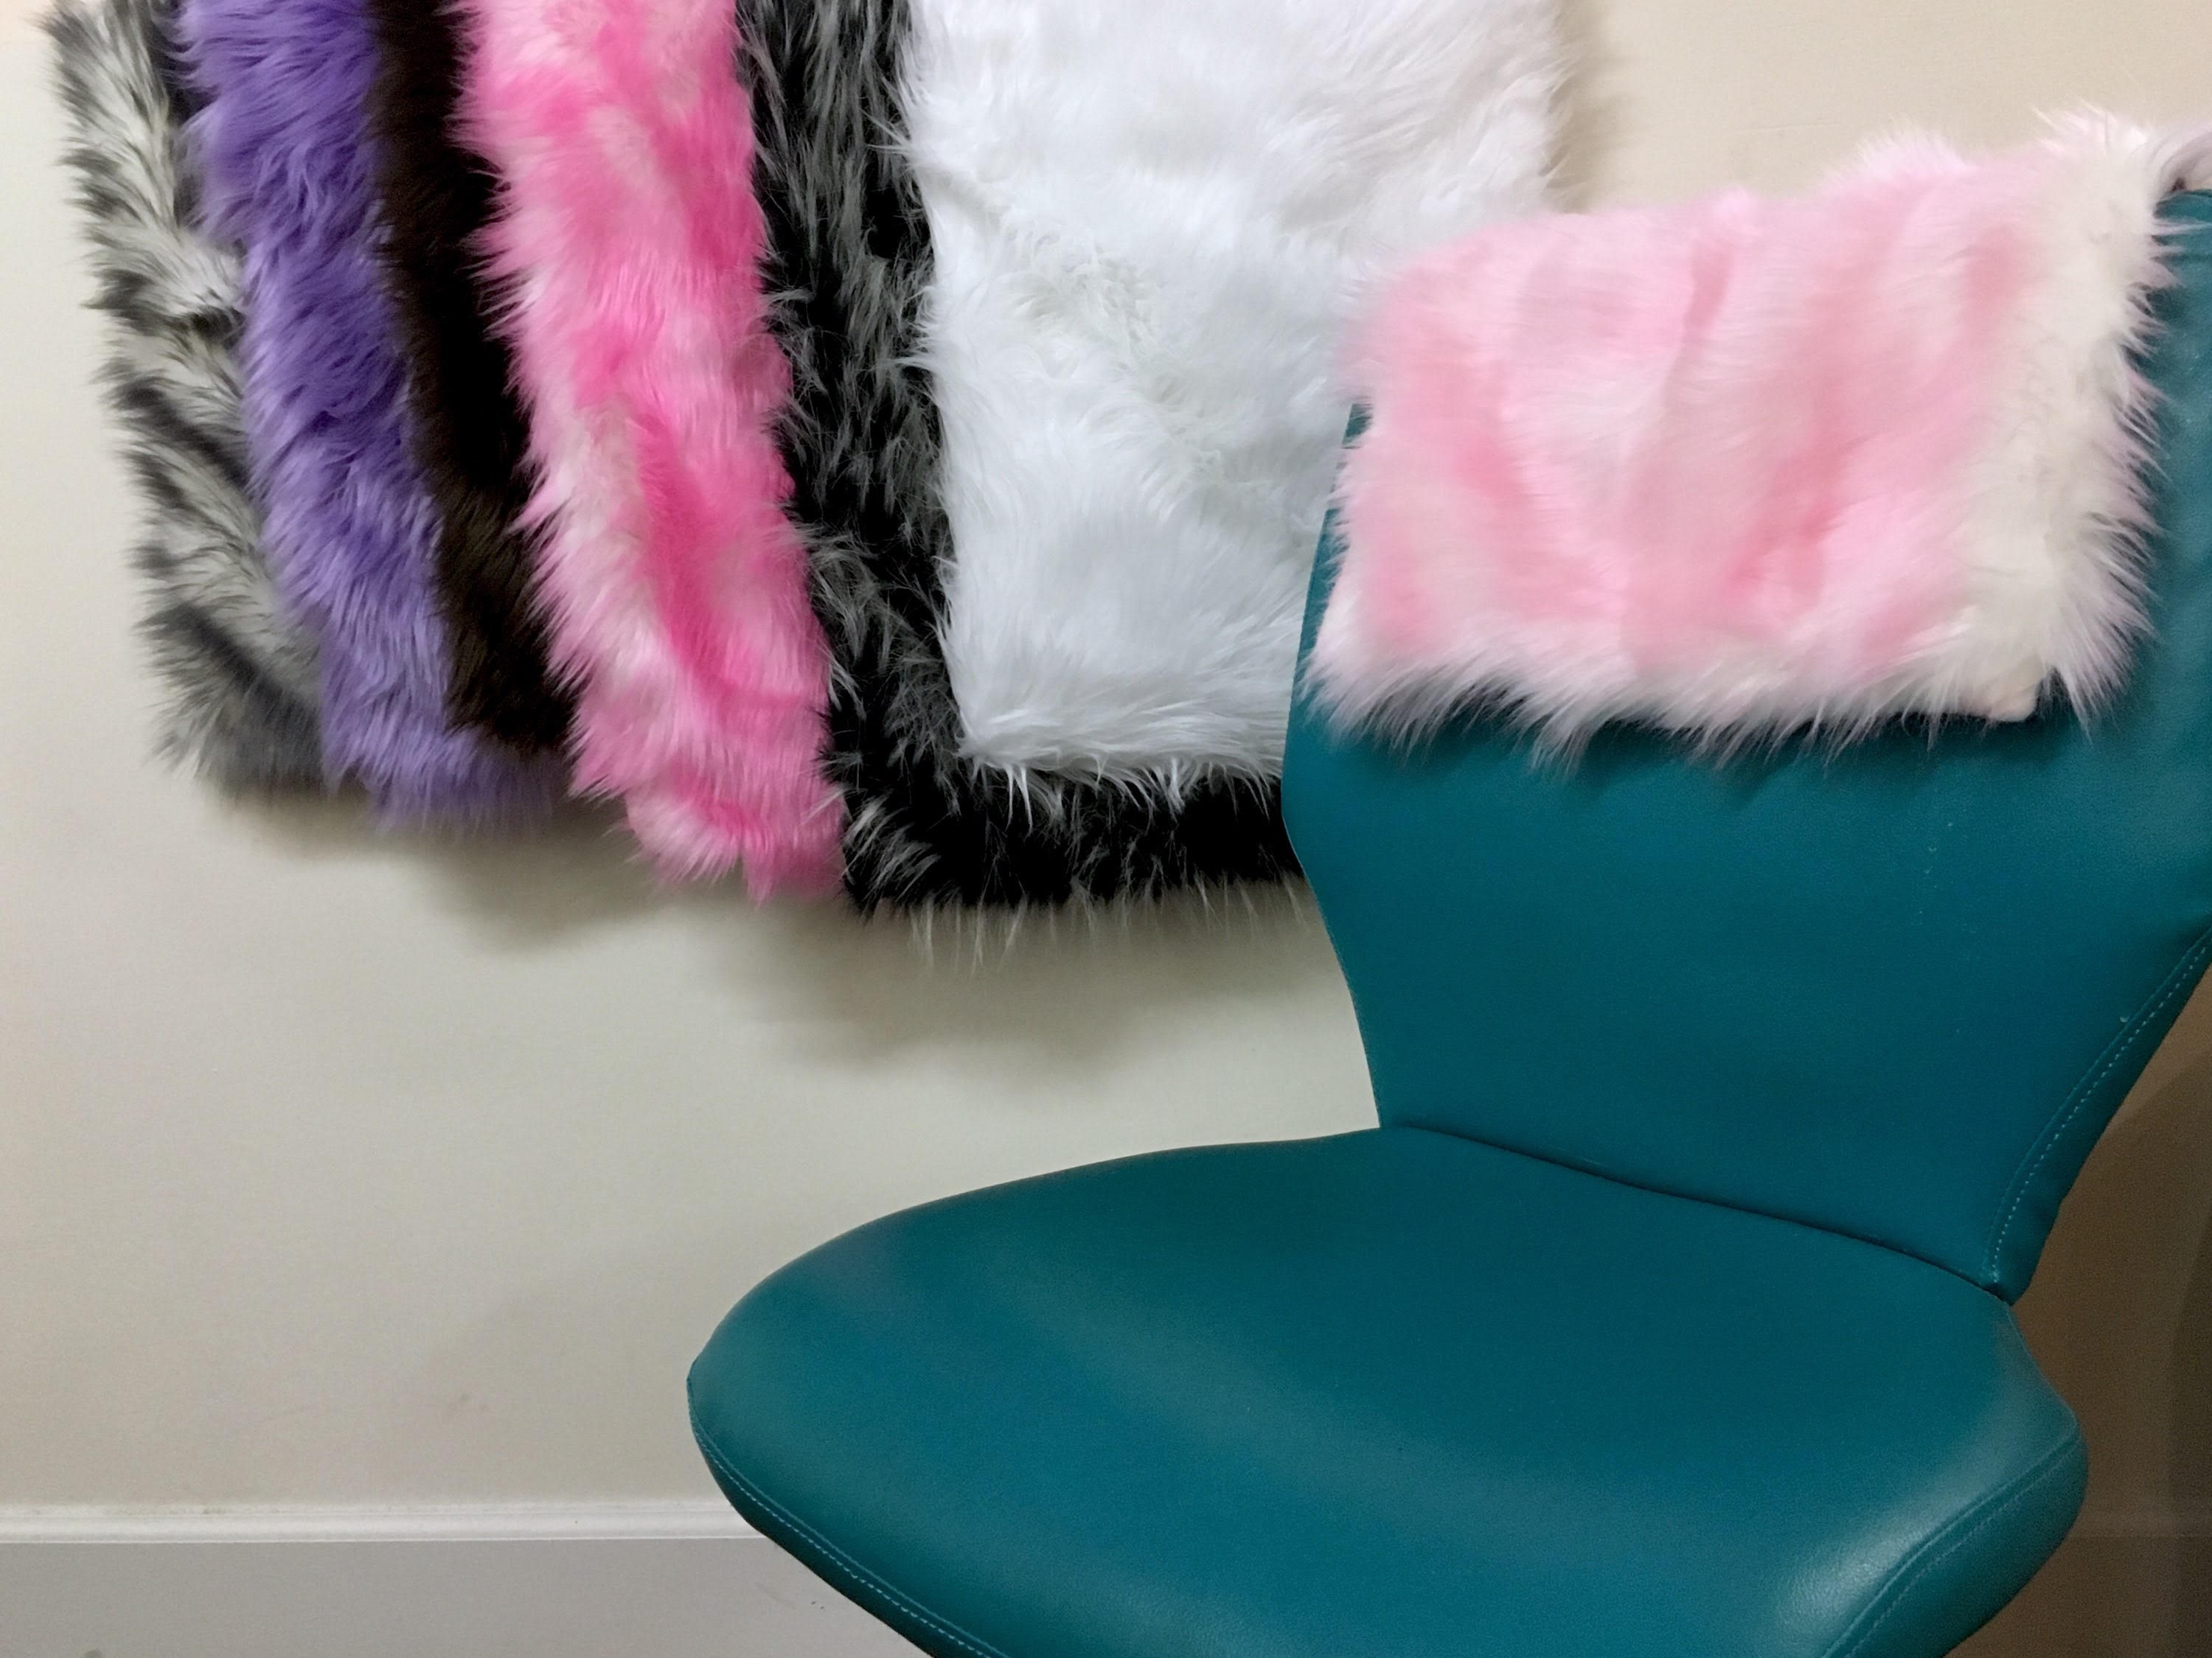 Shinnwa Grey Round Dorm Fur Chair Cushion Pad with Furry Faux Fur Cover  Small Mini Cute Seat Cushion for Kids Desk Chair Teen Girls Bedroom Décor  16